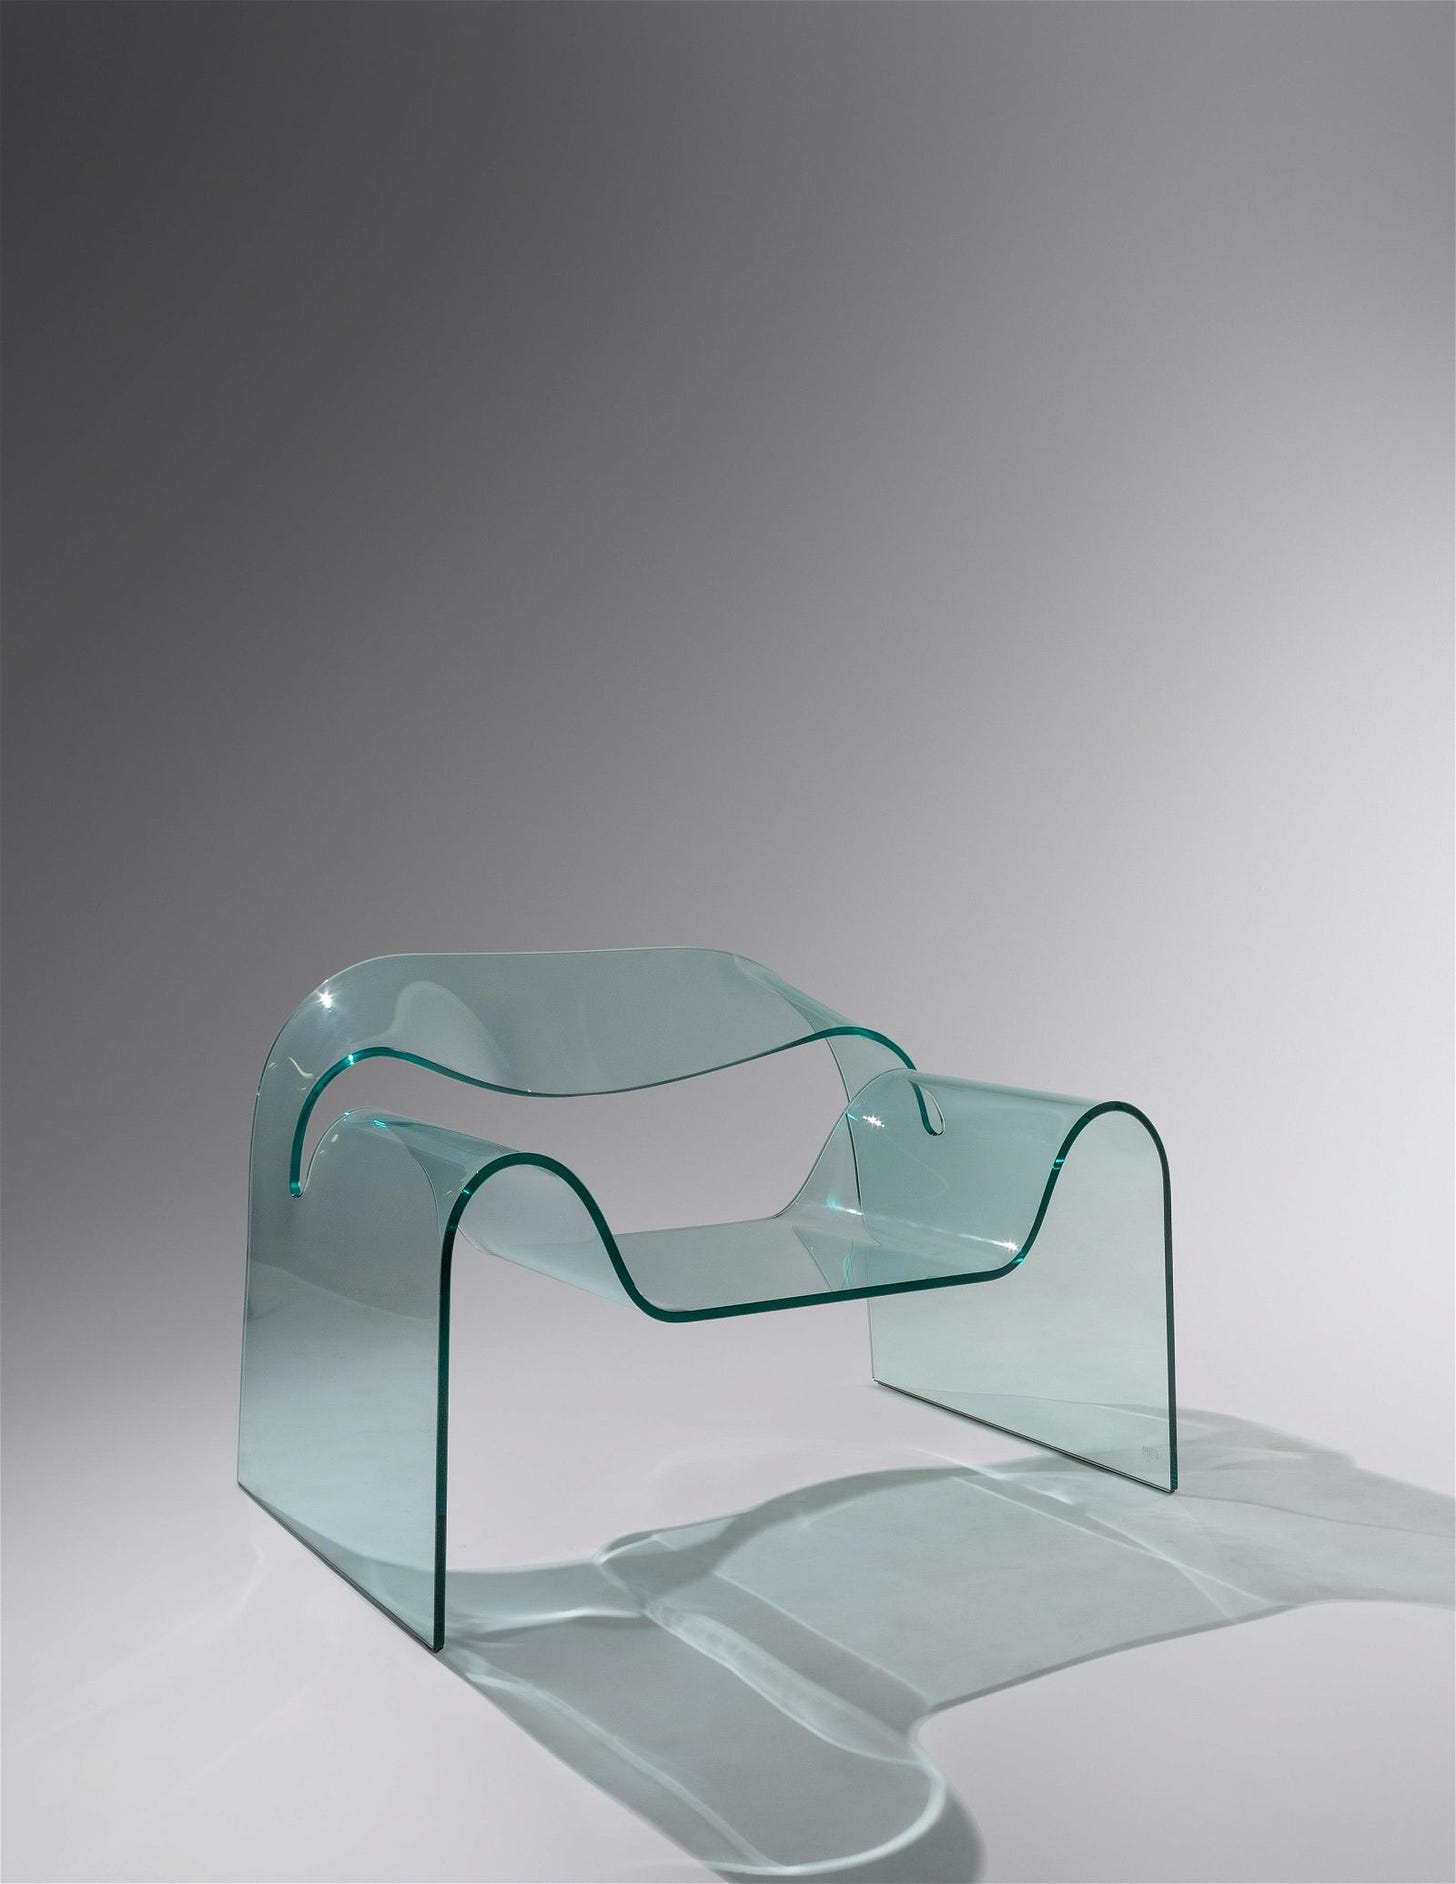 Cini Boeri (1924-2020) Ghost Lounge Chair, c. 1987 Fiam, Italy